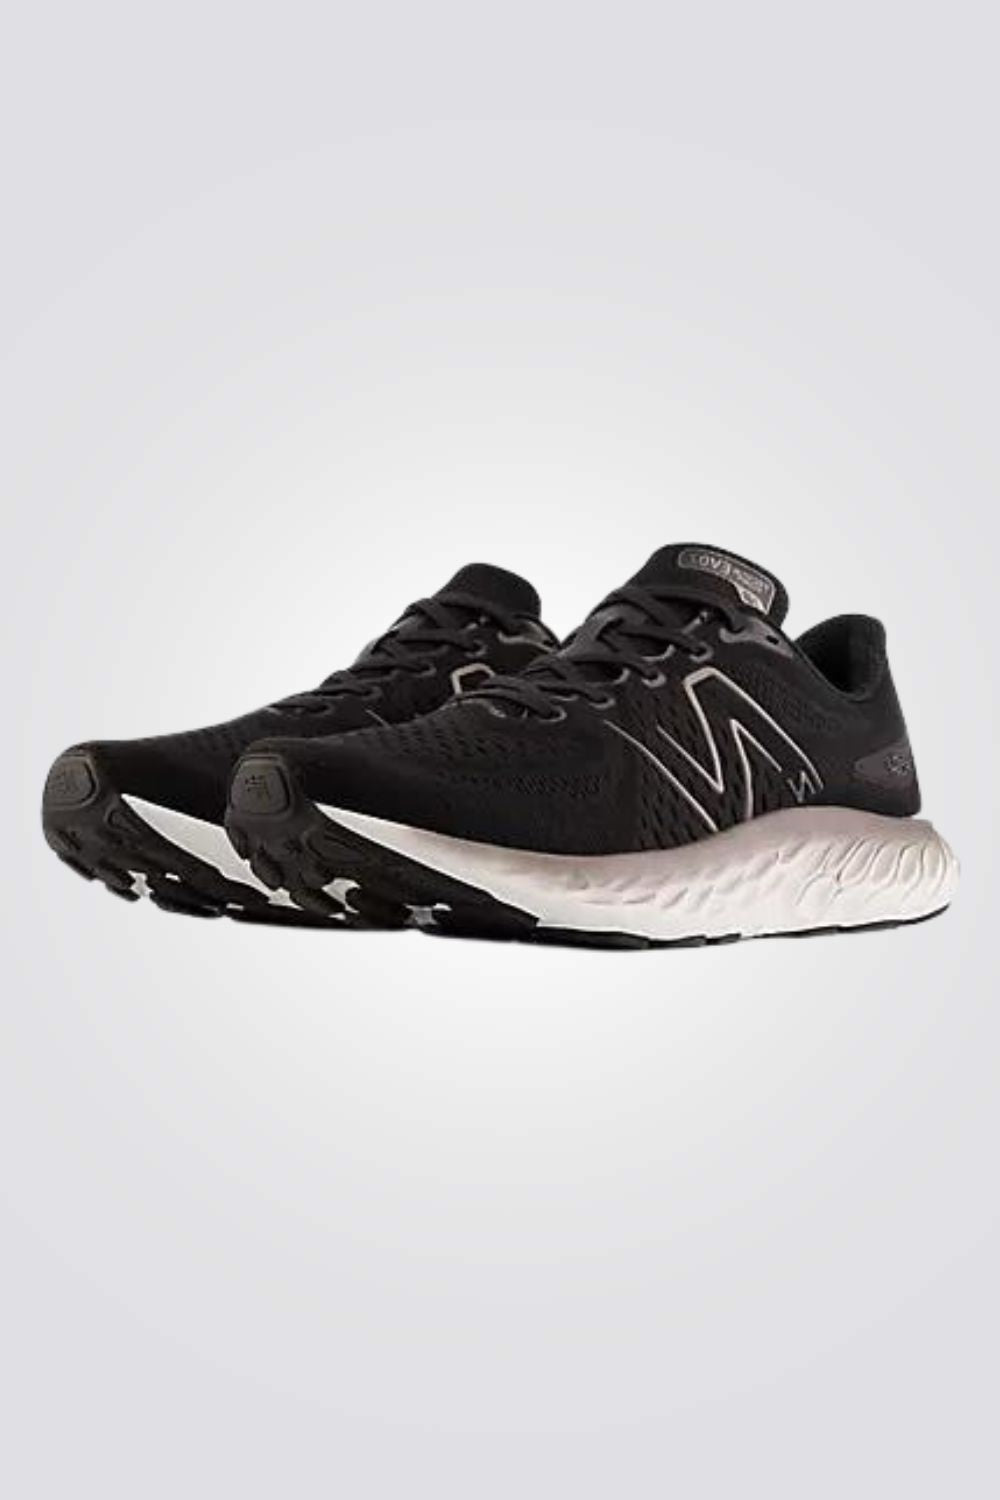 NEW BALANCE - נעלי ספורט לגברים MEVOZLK3 בצבע שחור ולבן - MASHBIR//365